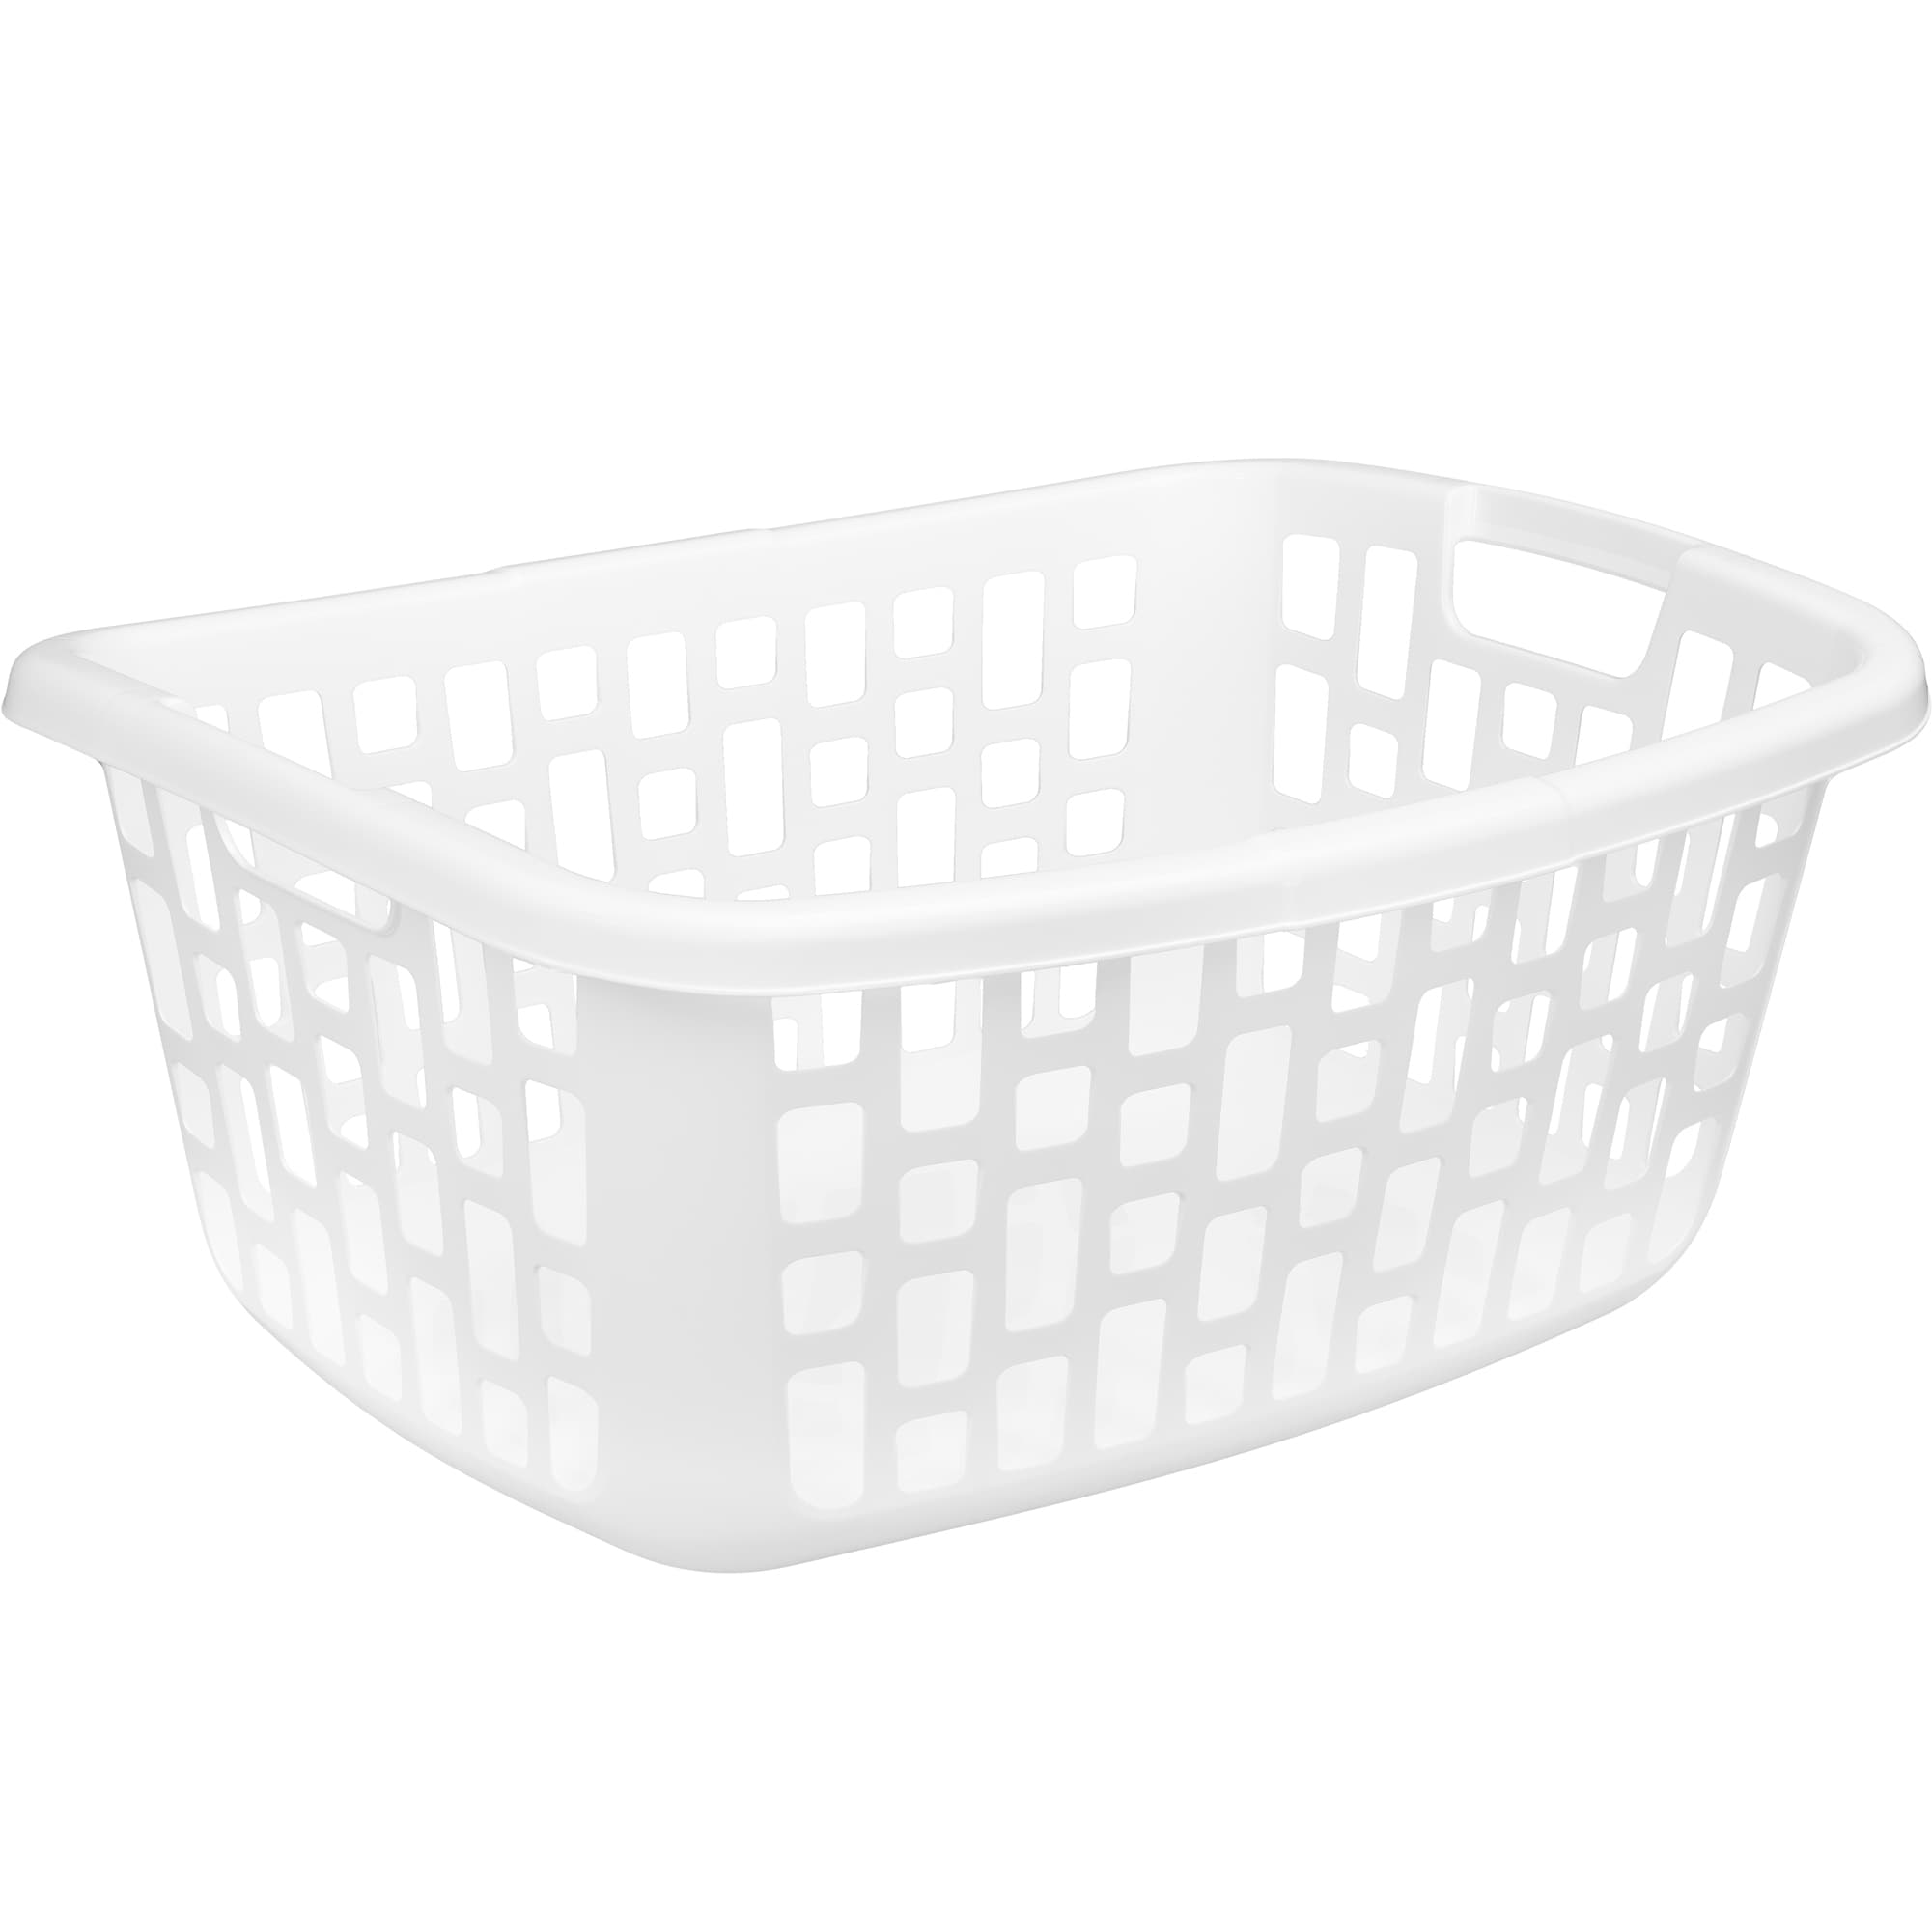 4 Tier Laundry Basket Holder (1.5 Bushel)